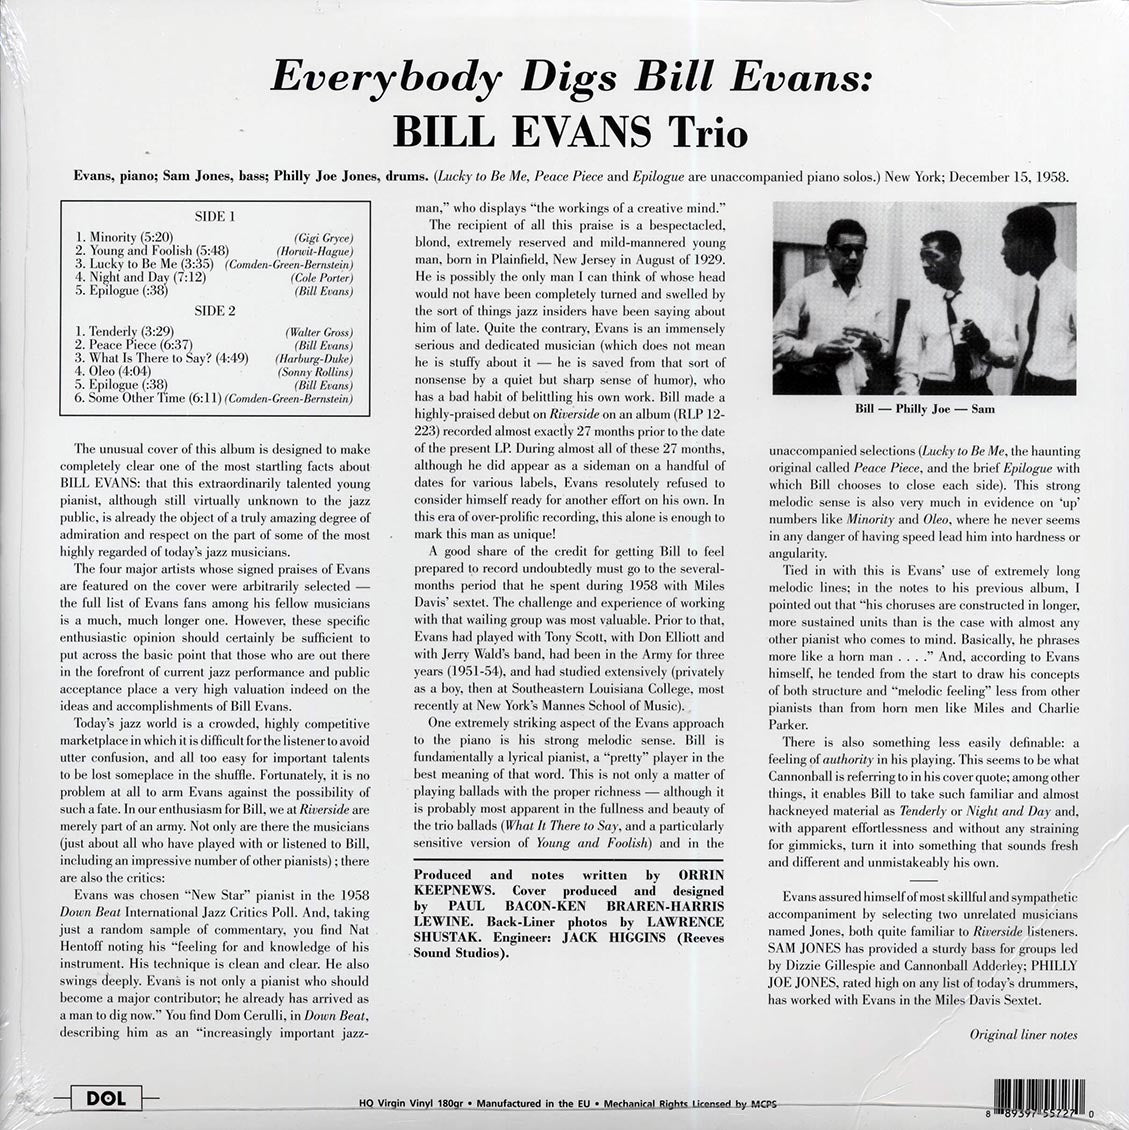 Bill Evans - Everybody Digs Bill Evans (180g) - Vinyl LP, LP